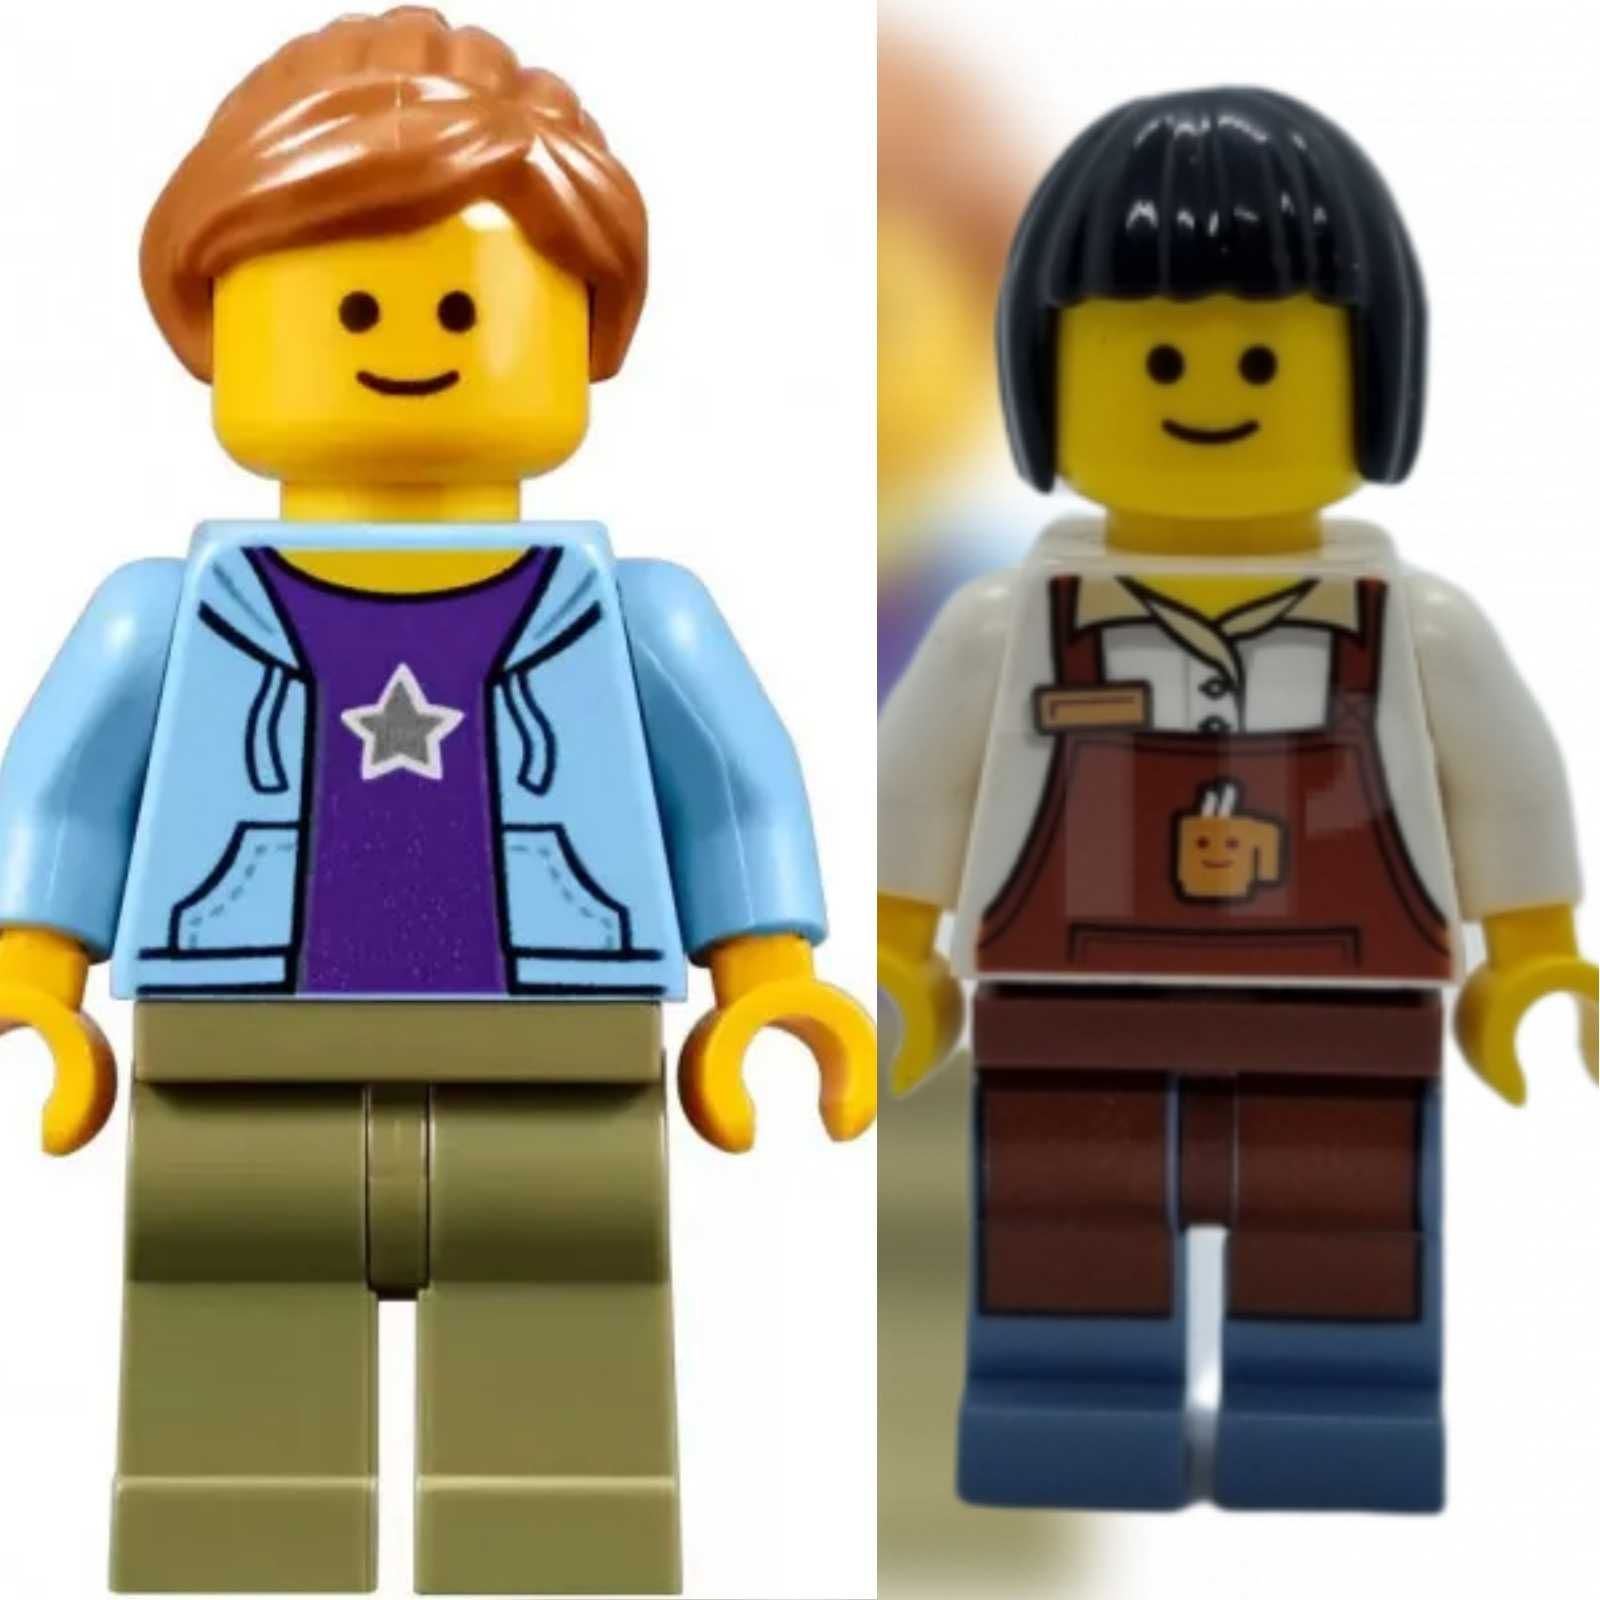 Фигурки LEGO City Creator оригинал из серии 2012 года